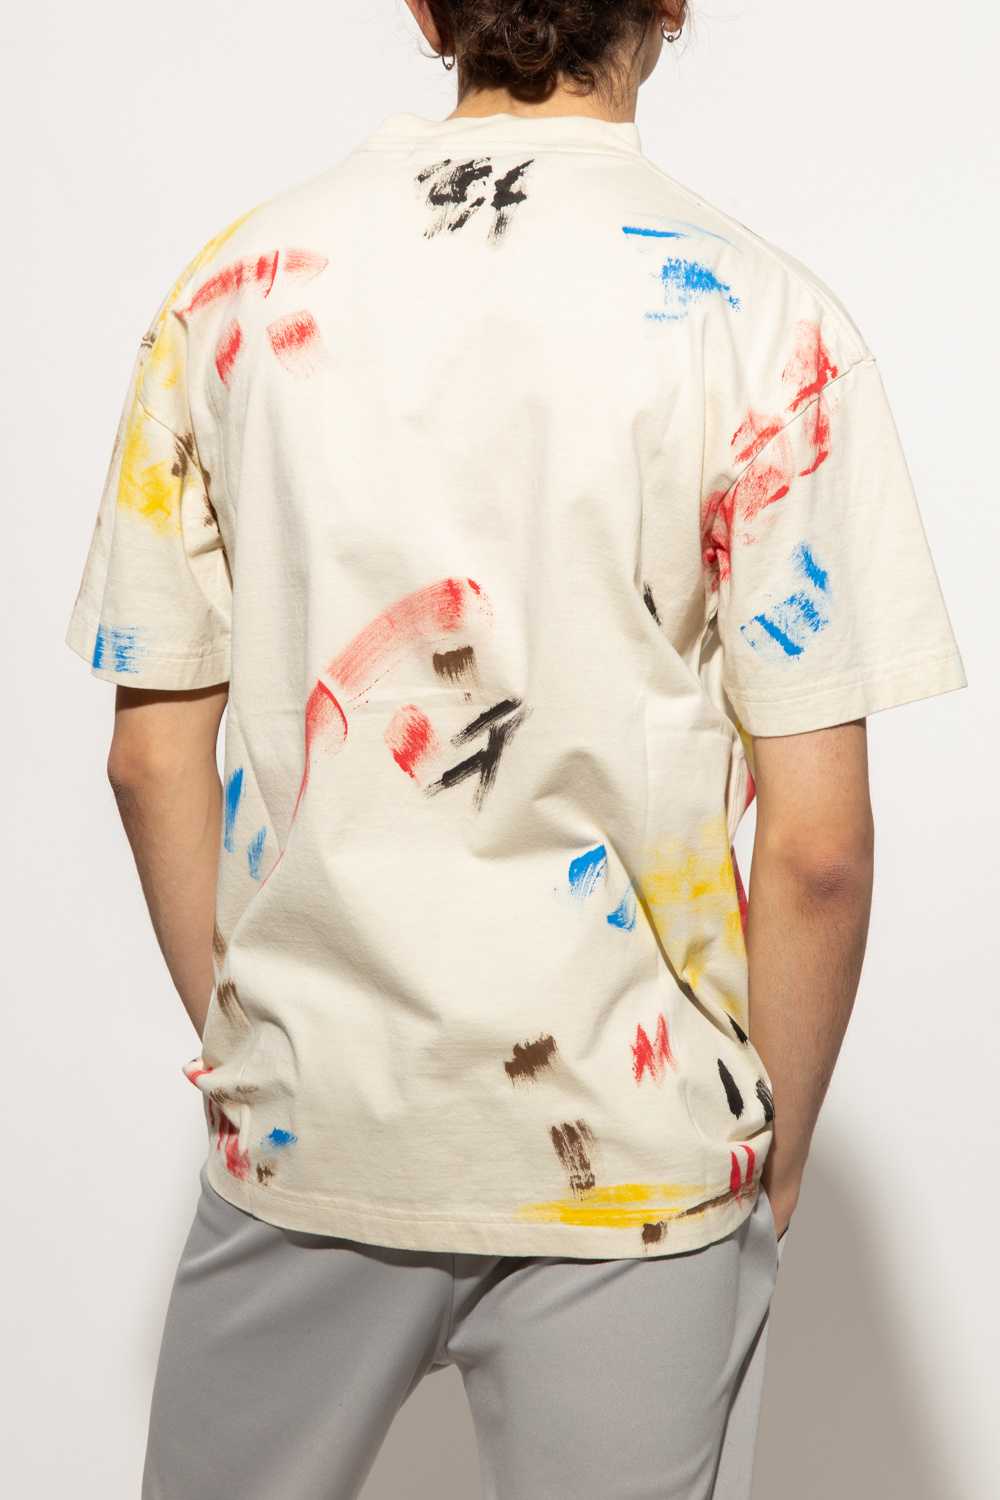 Palm Angels T-shirt with paint-splatter treatment, Men's Clothing